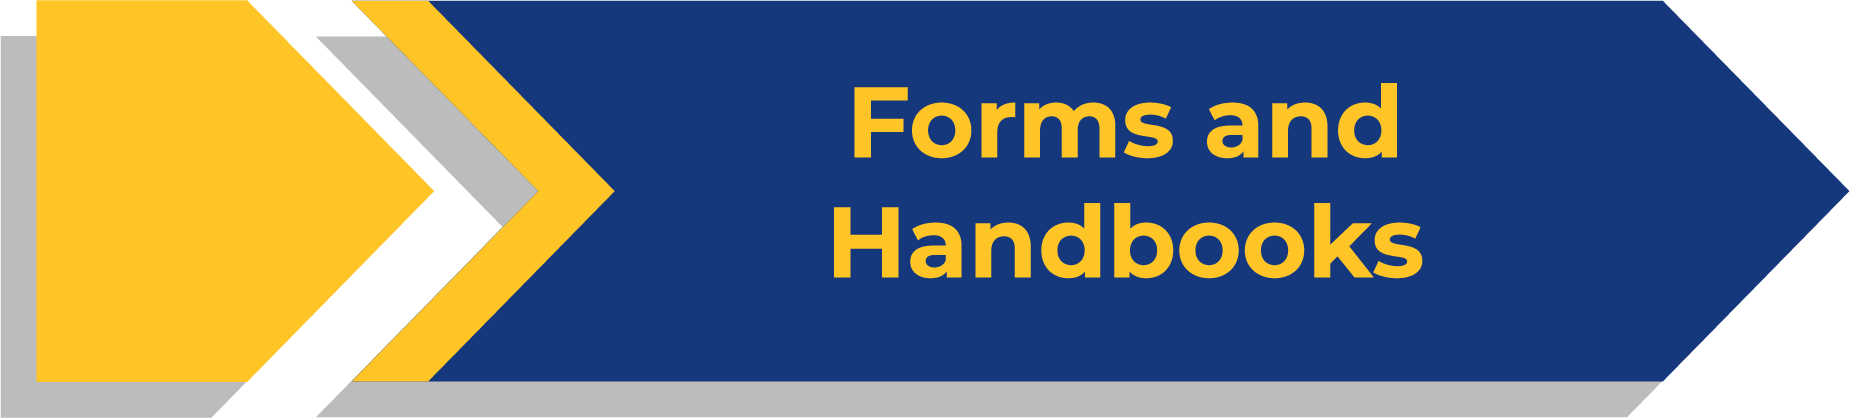 forms and handbooks